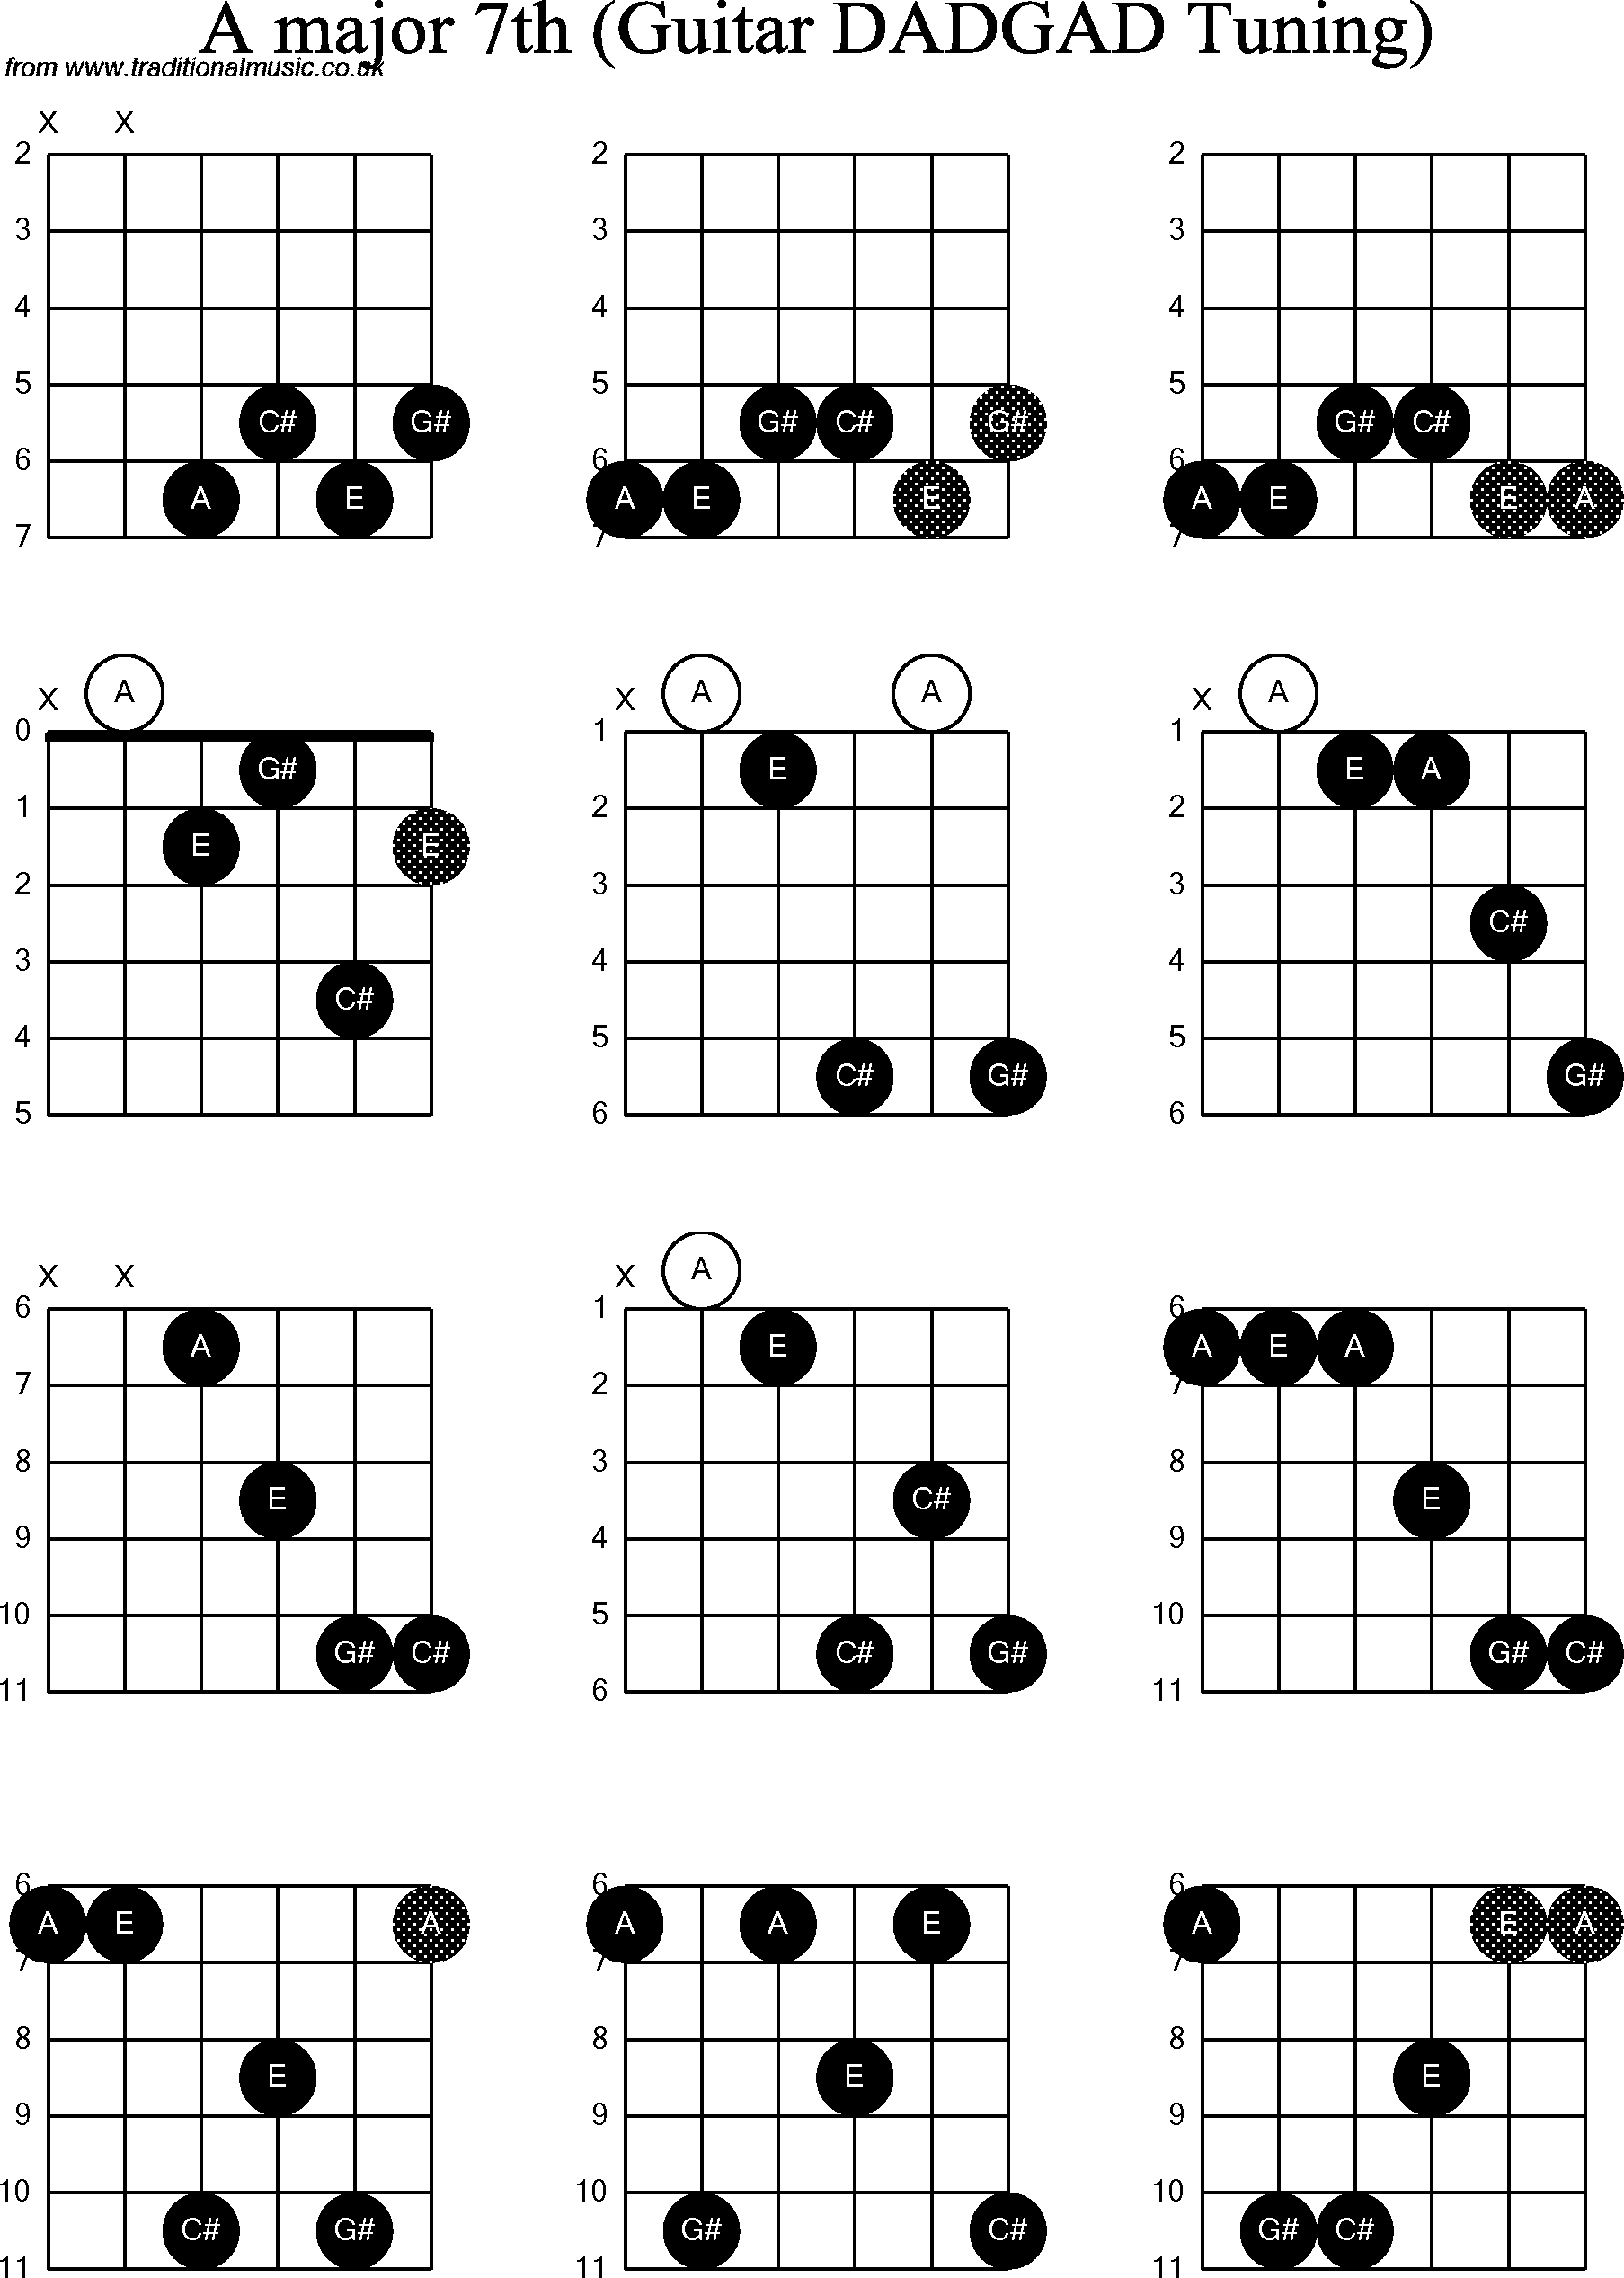 Chord Diagrams for D Modal Guitar(DADGAD), A Major7th